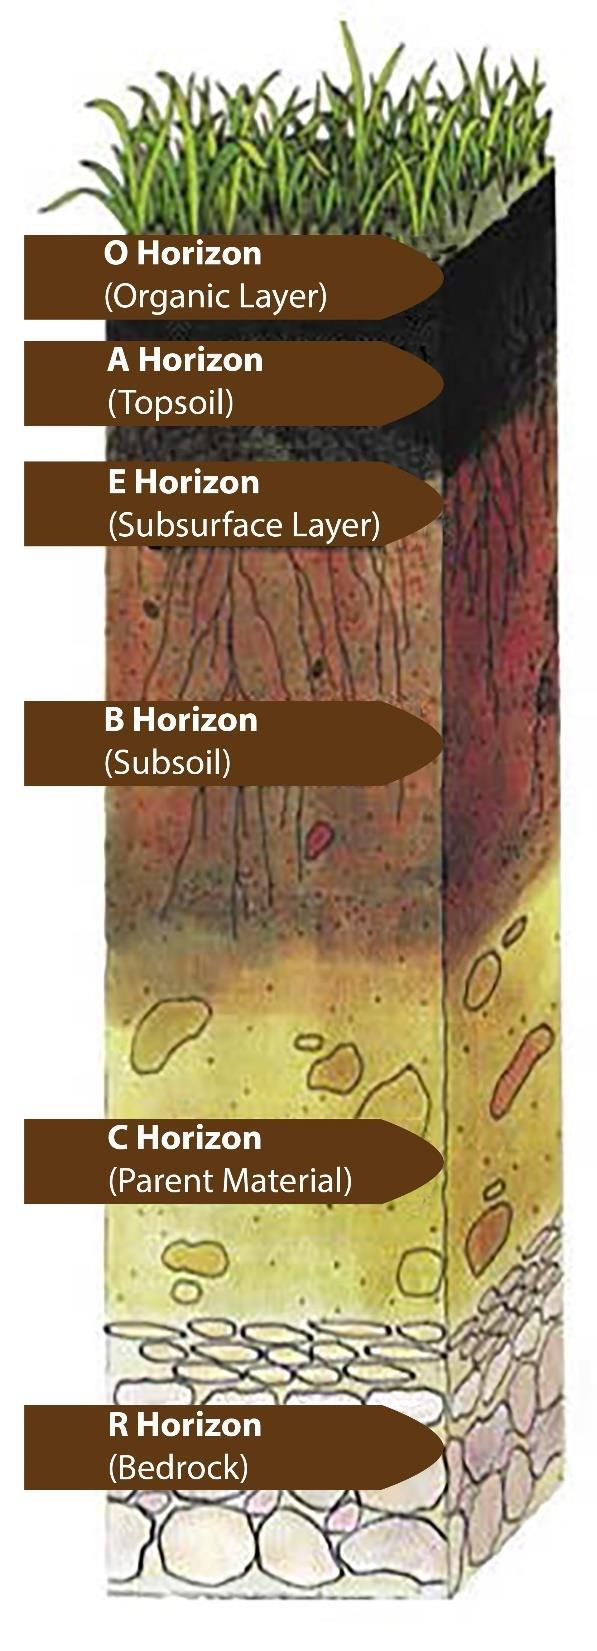 Soil Horizon (Layers/Profiles) O - (Organic) Ecosystem litter, organic matter (humus), soil organisms (bacteria, fungus, etc) A (Topsoil) Mixture of partially decomposed organic